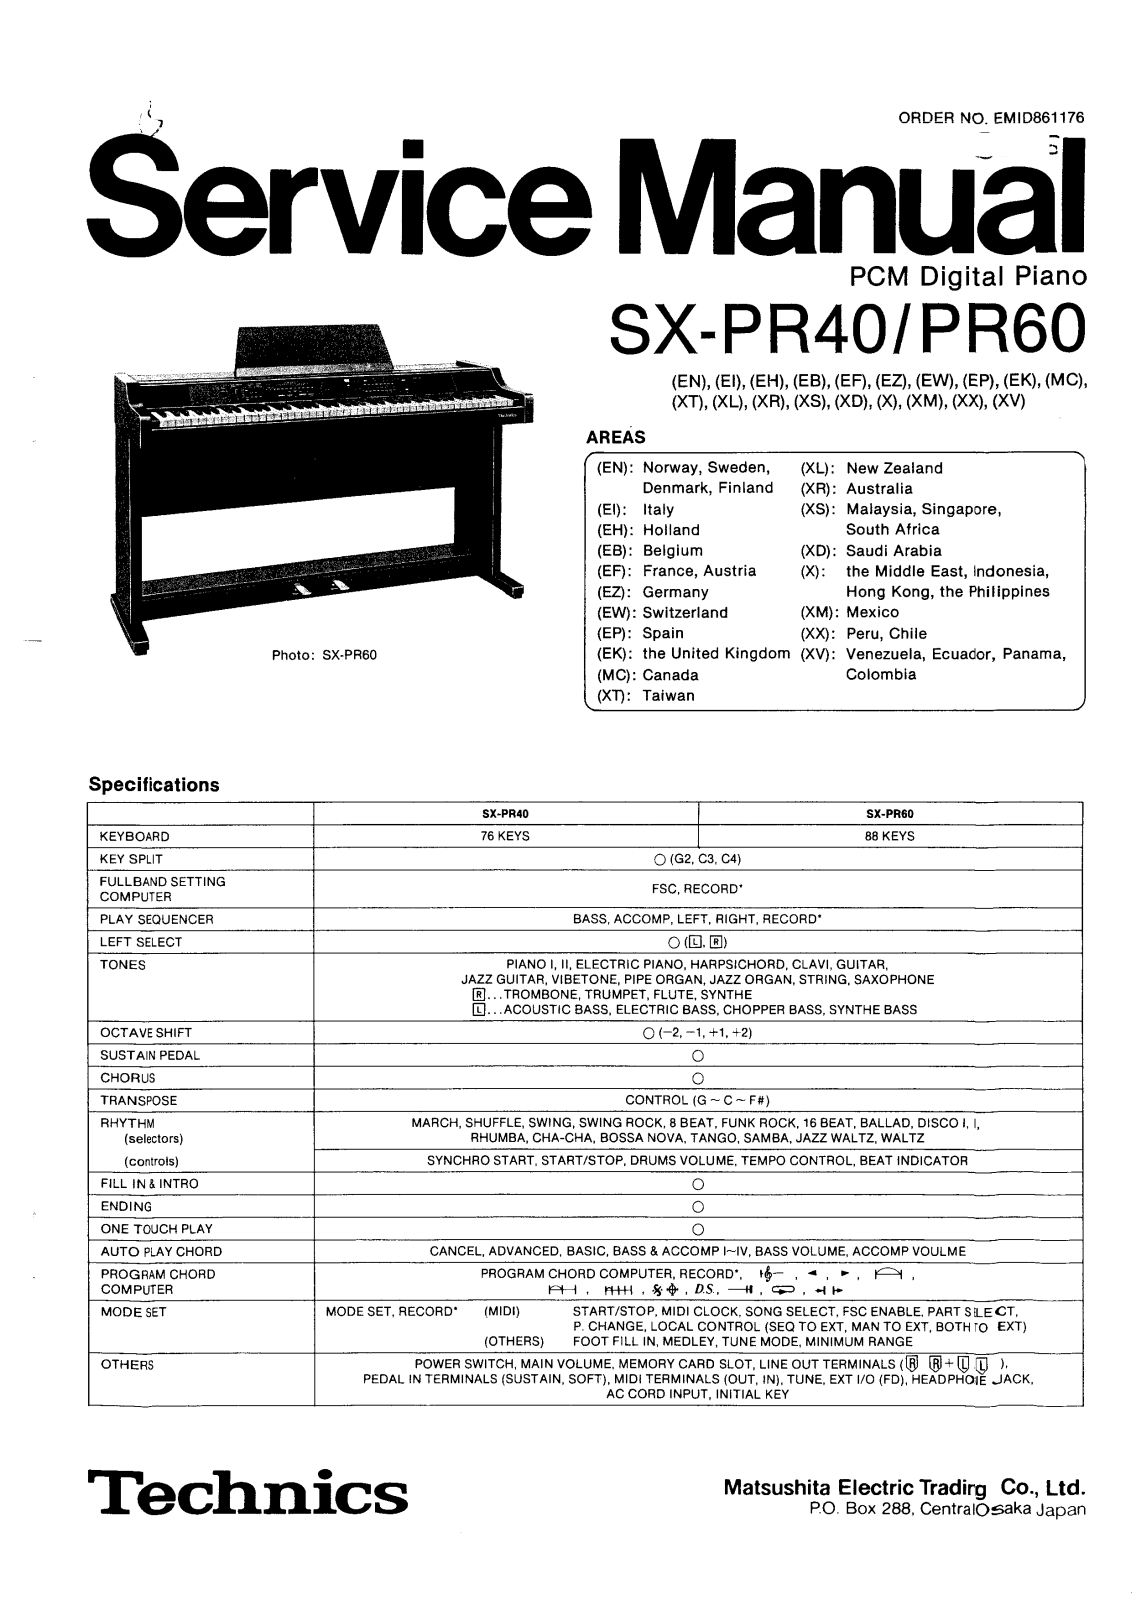 Technics SX-PR40, SX-PR60 Service Manual